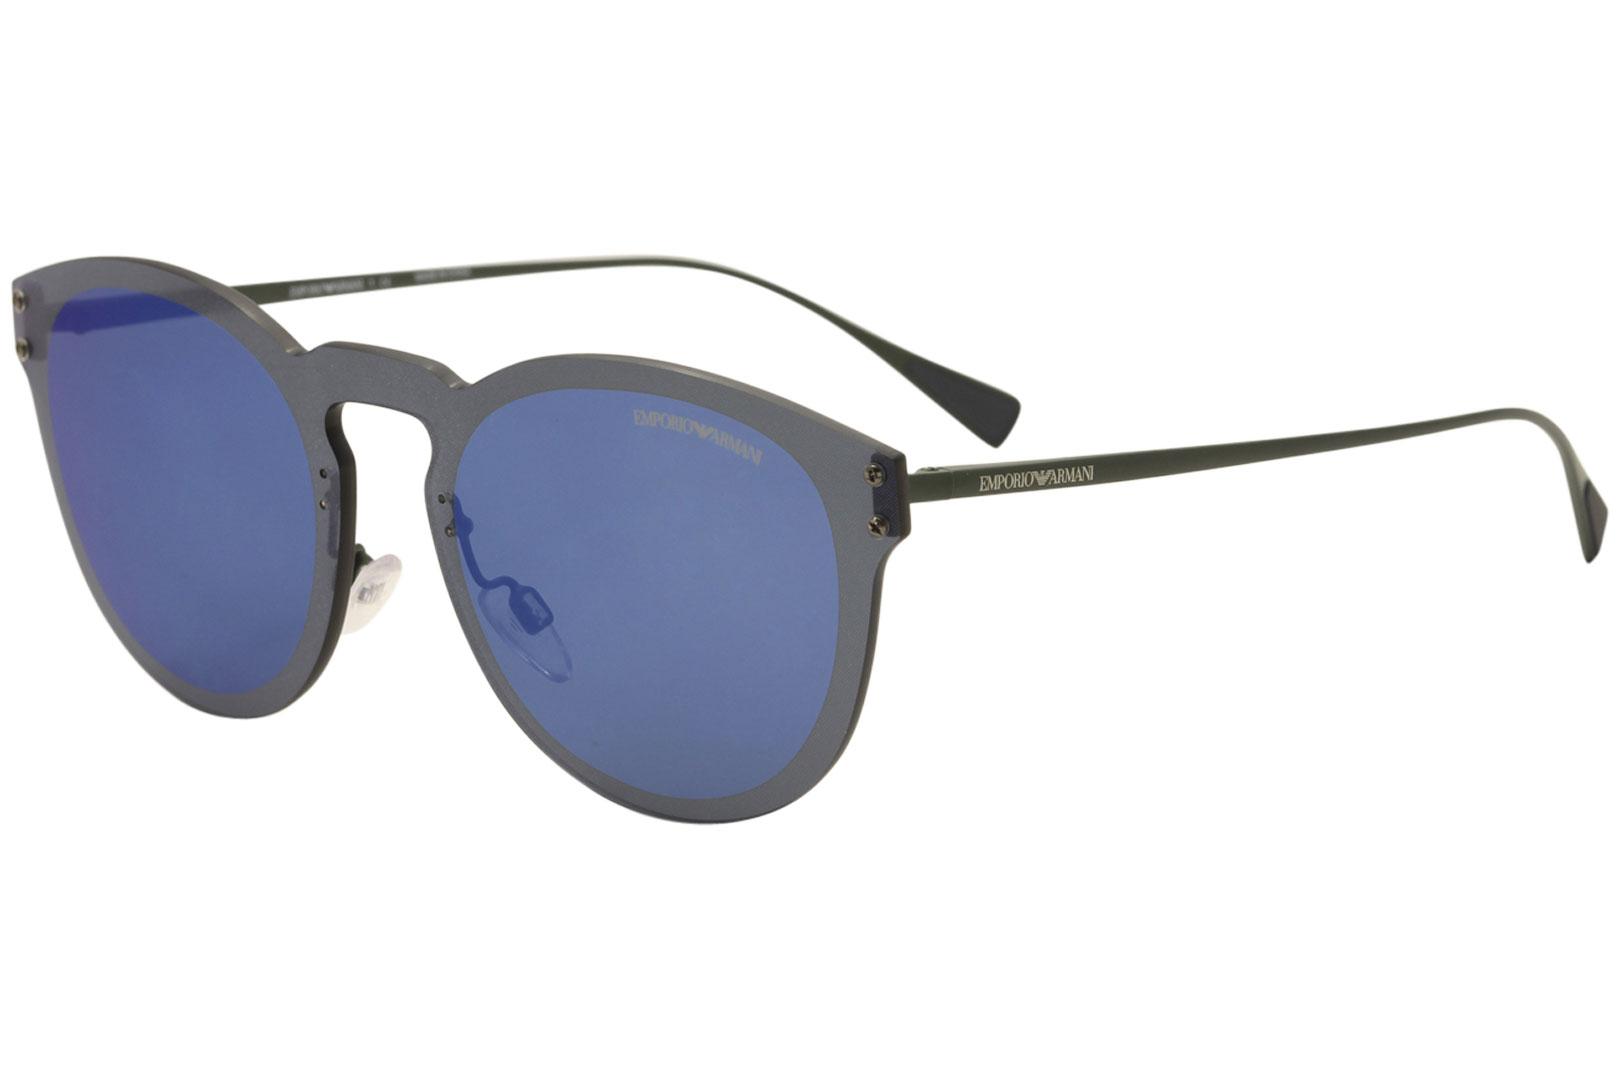 Emporio Armani Men's EA2049 EA/2049 Shield Sunglasses - Matte Green/Navy/Blue Mirror   3173/55 - Lens 43 Bridge 143 Temple 145mm